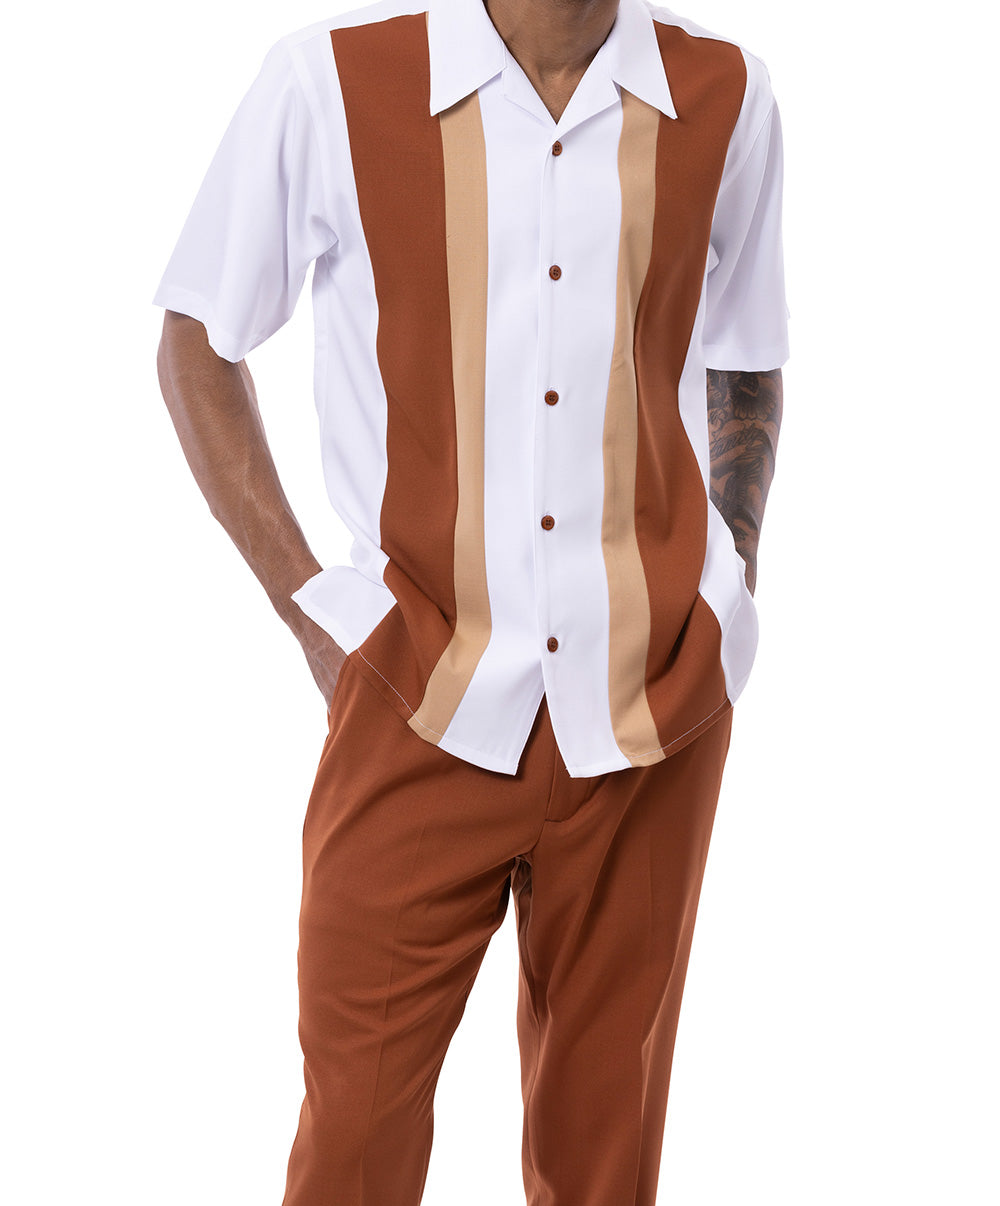 Cognac/Tan Vertical Color Block Walking Suit 2 Piece Short Sleeve Set